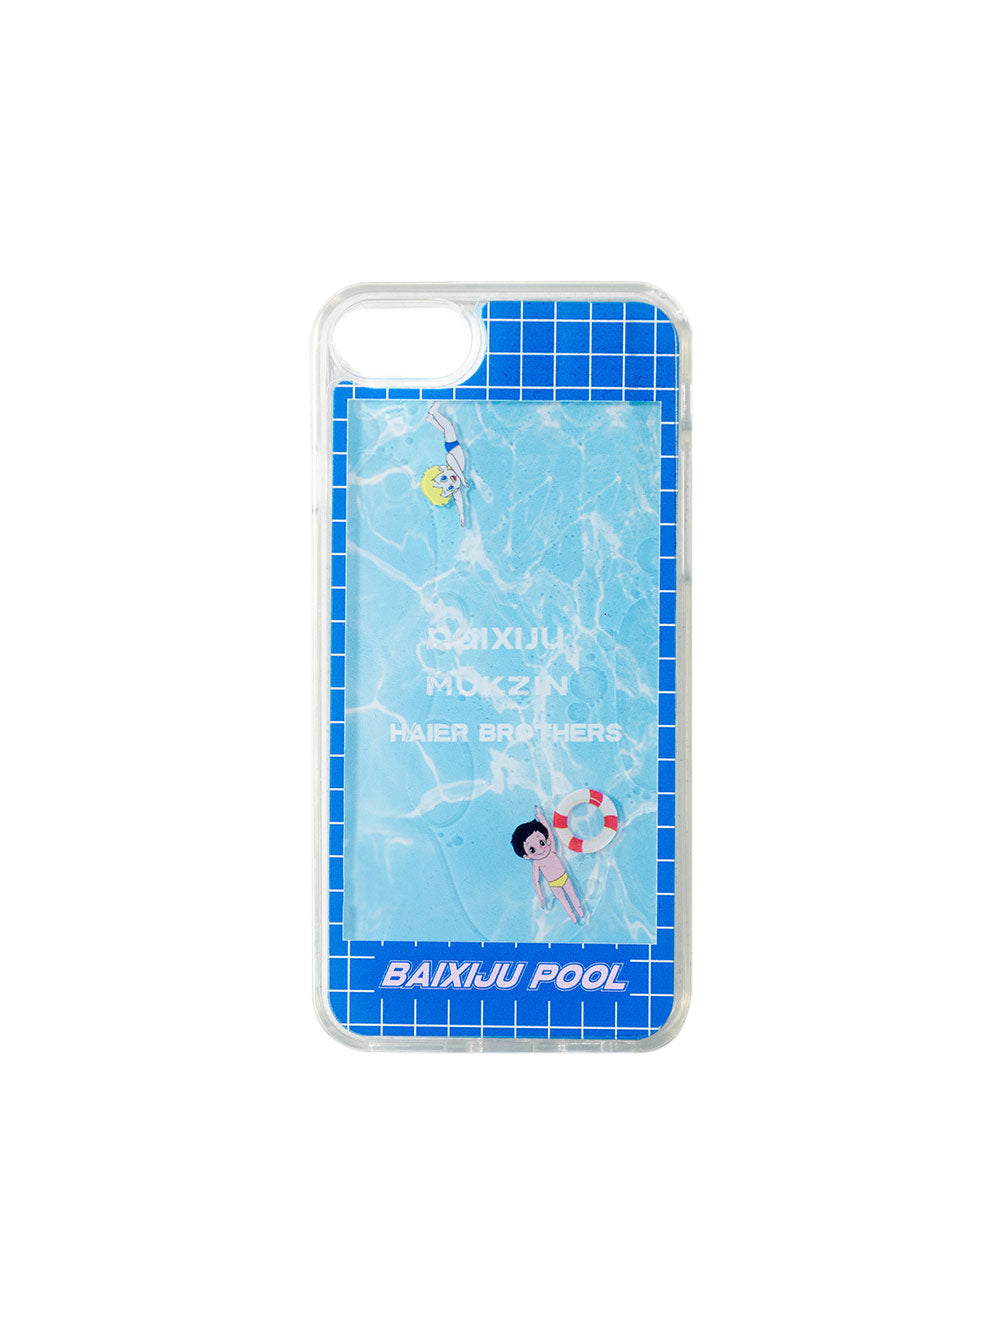 Mukzin Designer Brand X Haier Brothers Swimming Pool iPhone Case